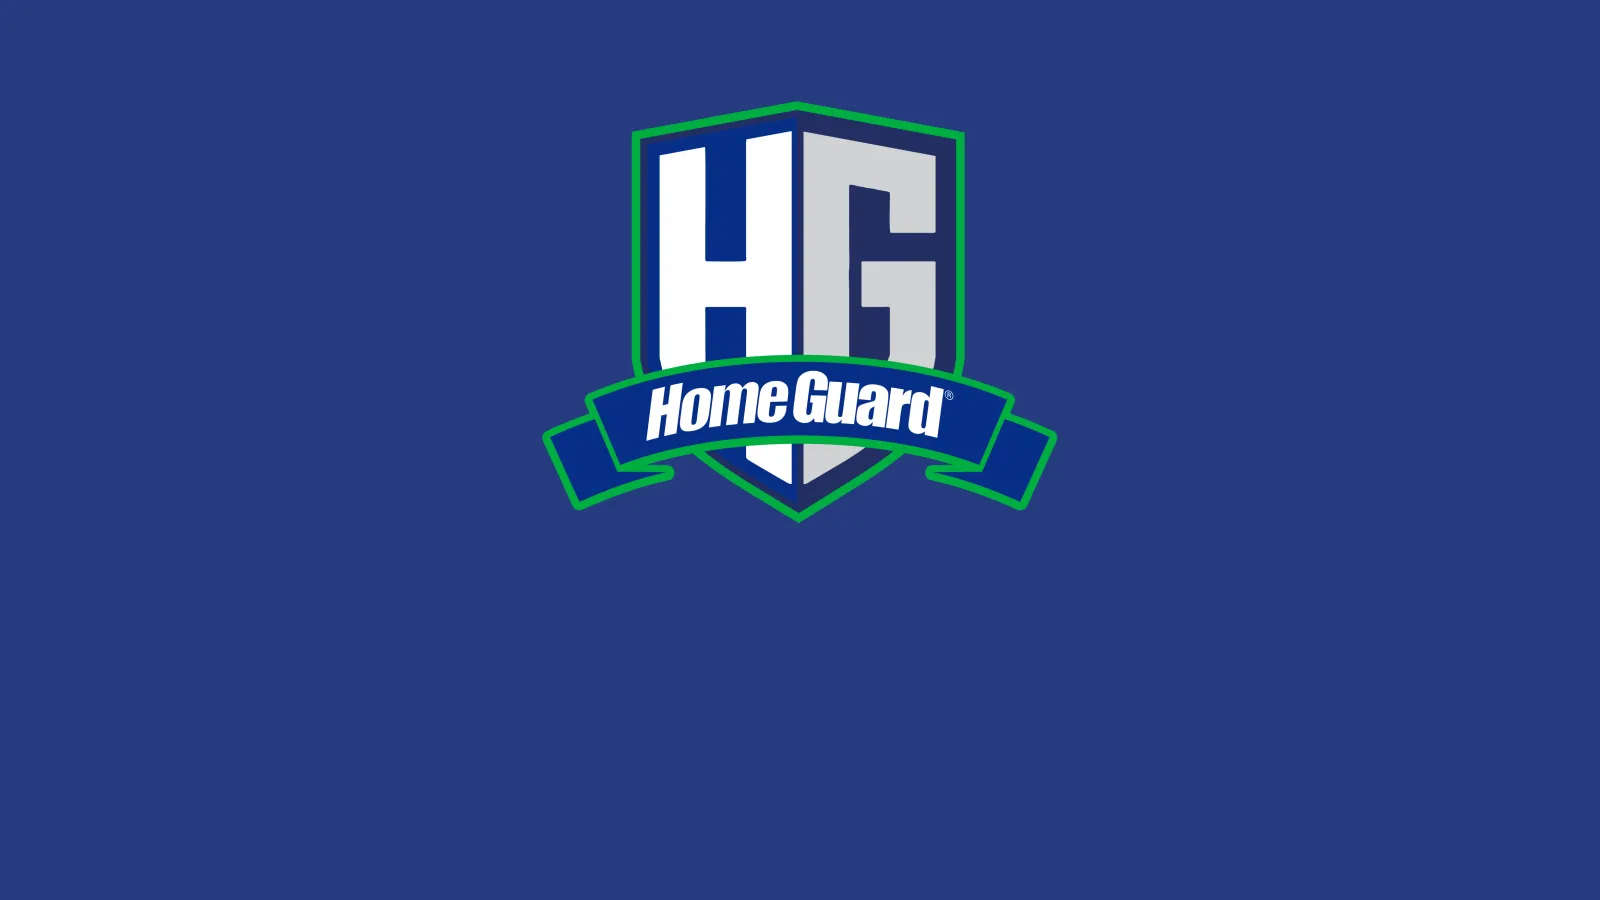 Home Guard logo